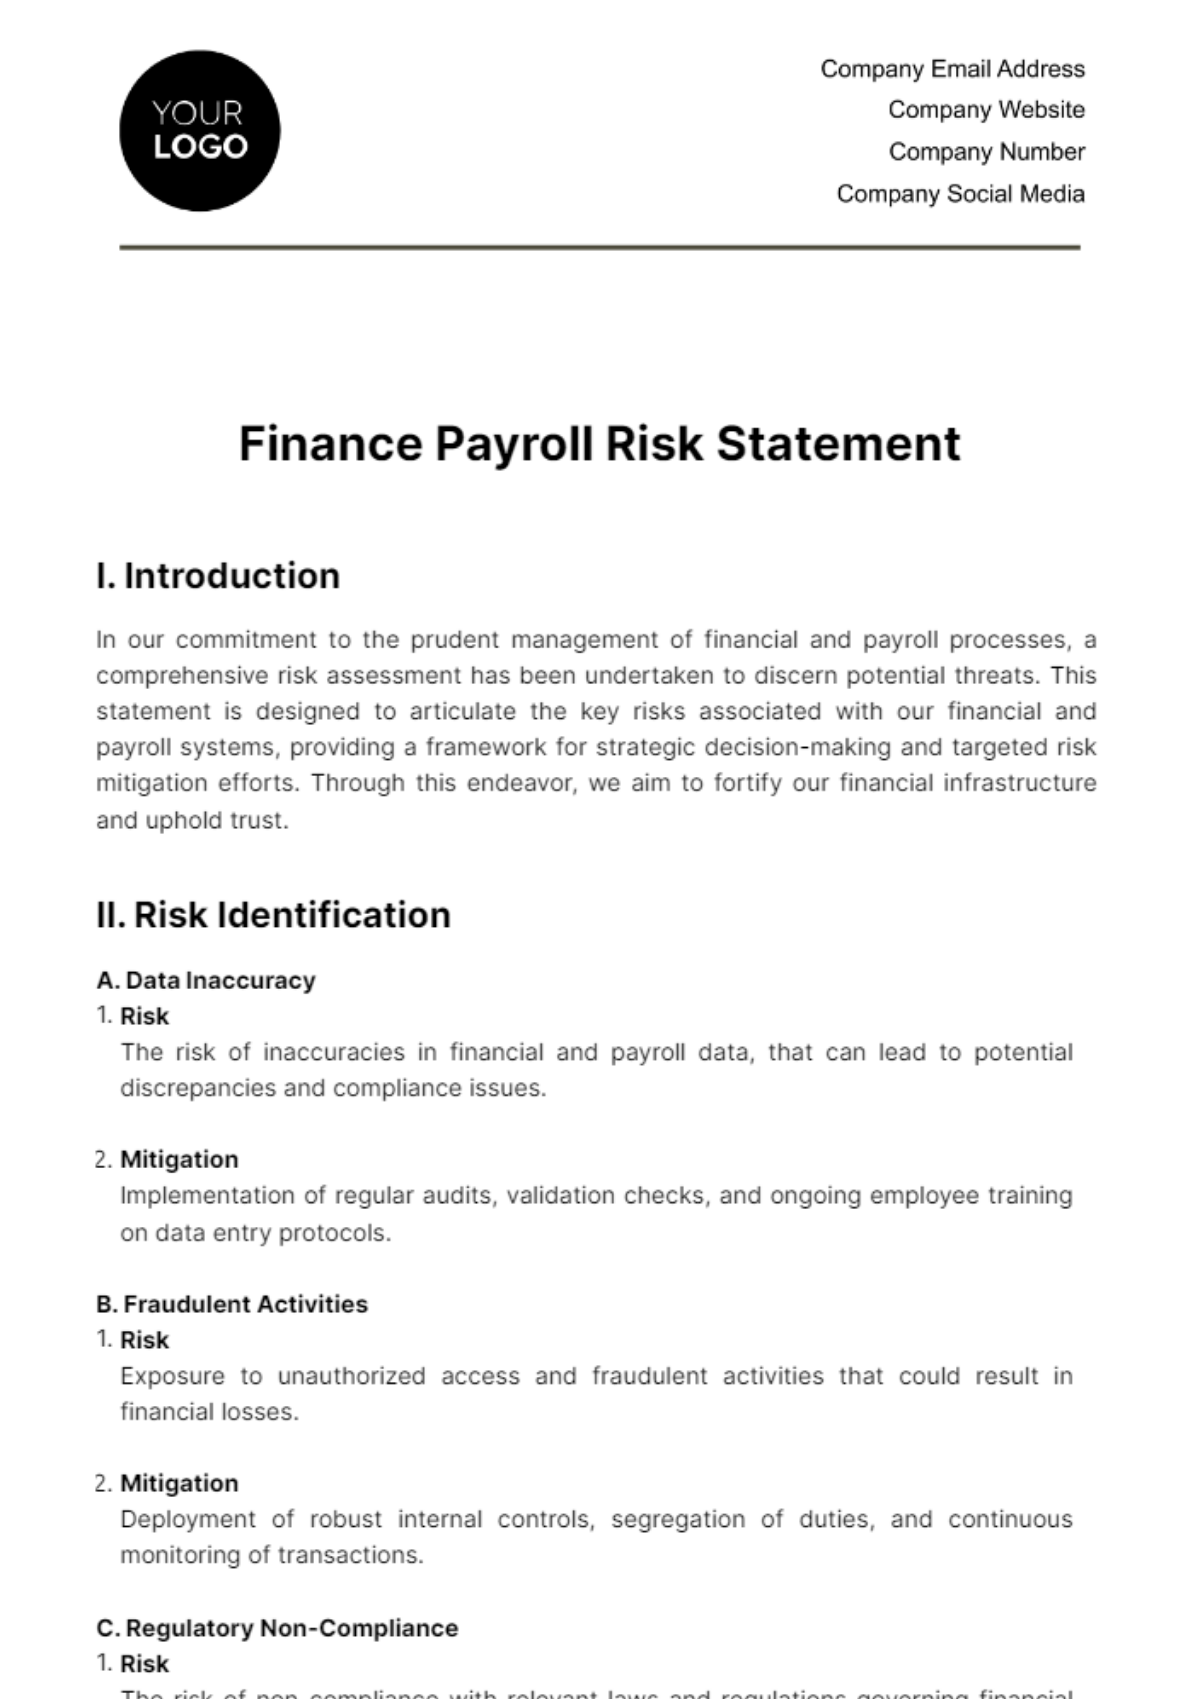 Free Finance Payroll Risk Statement Template